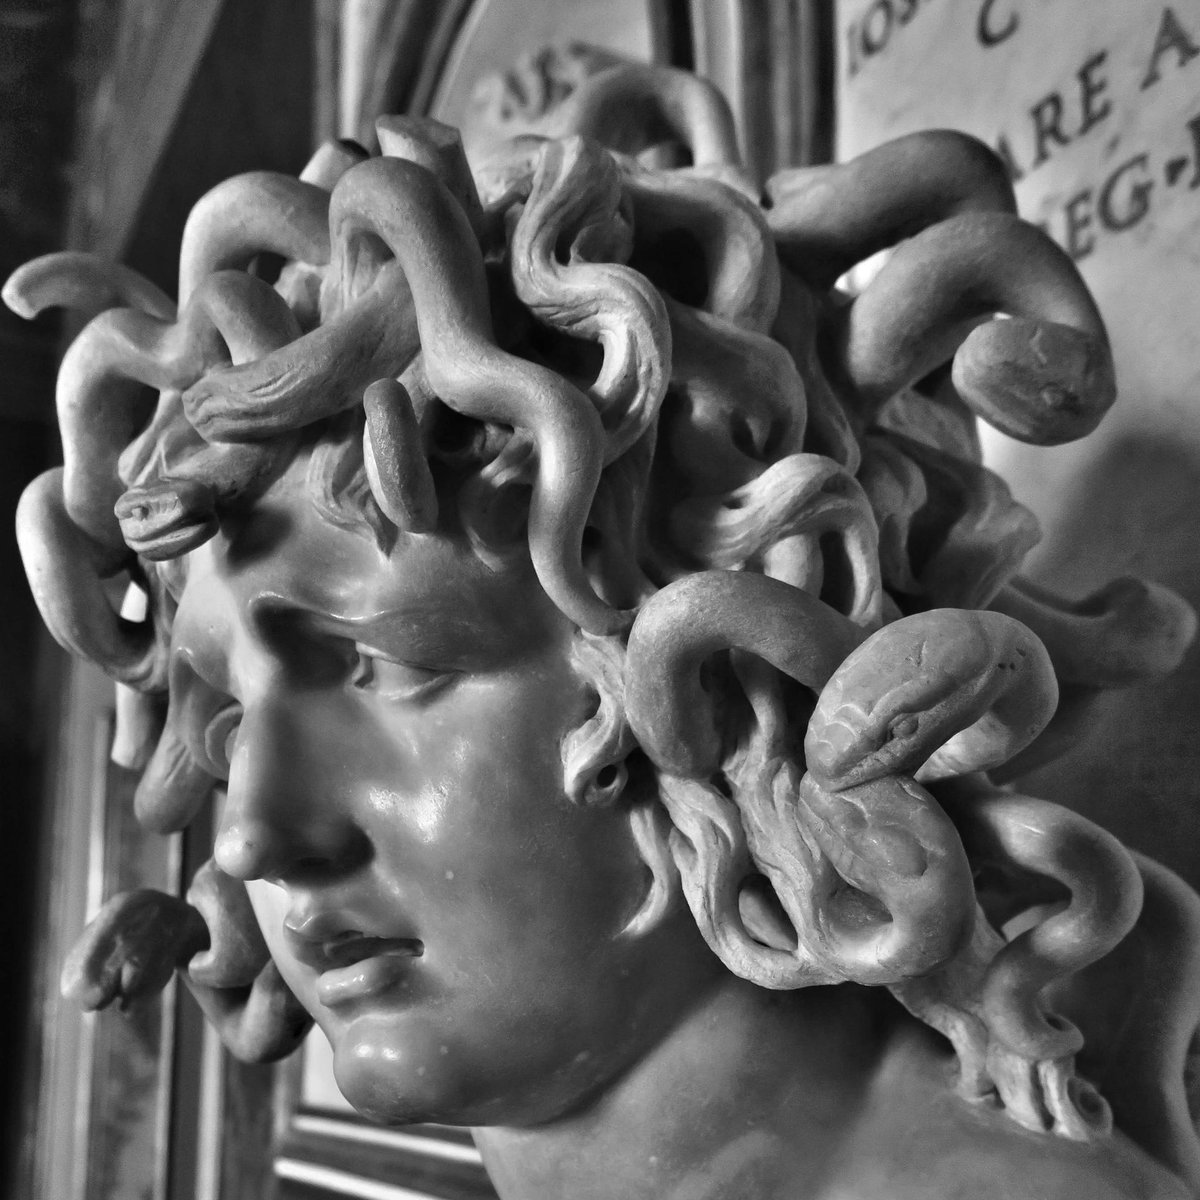 Le Rire de la #Méduse.

#medusa #museicapitolini #sculpture #scultura #roma #rome #futurefeminism #musei #volgoarte #museiitaliani #luoghidellanima #myfavouriteplace